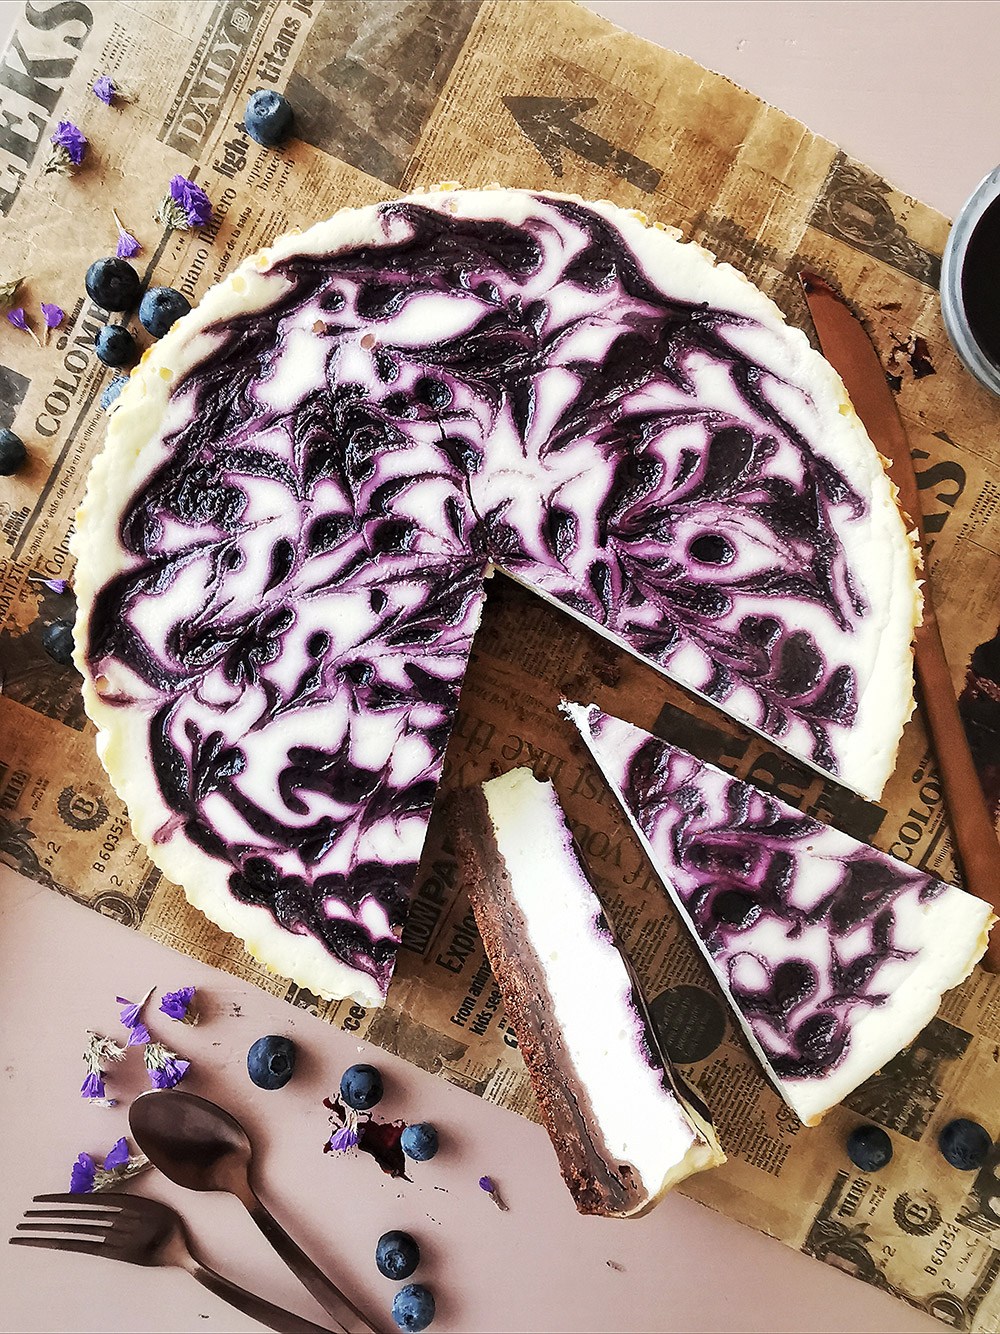 Blueberry swirl cheesecake....